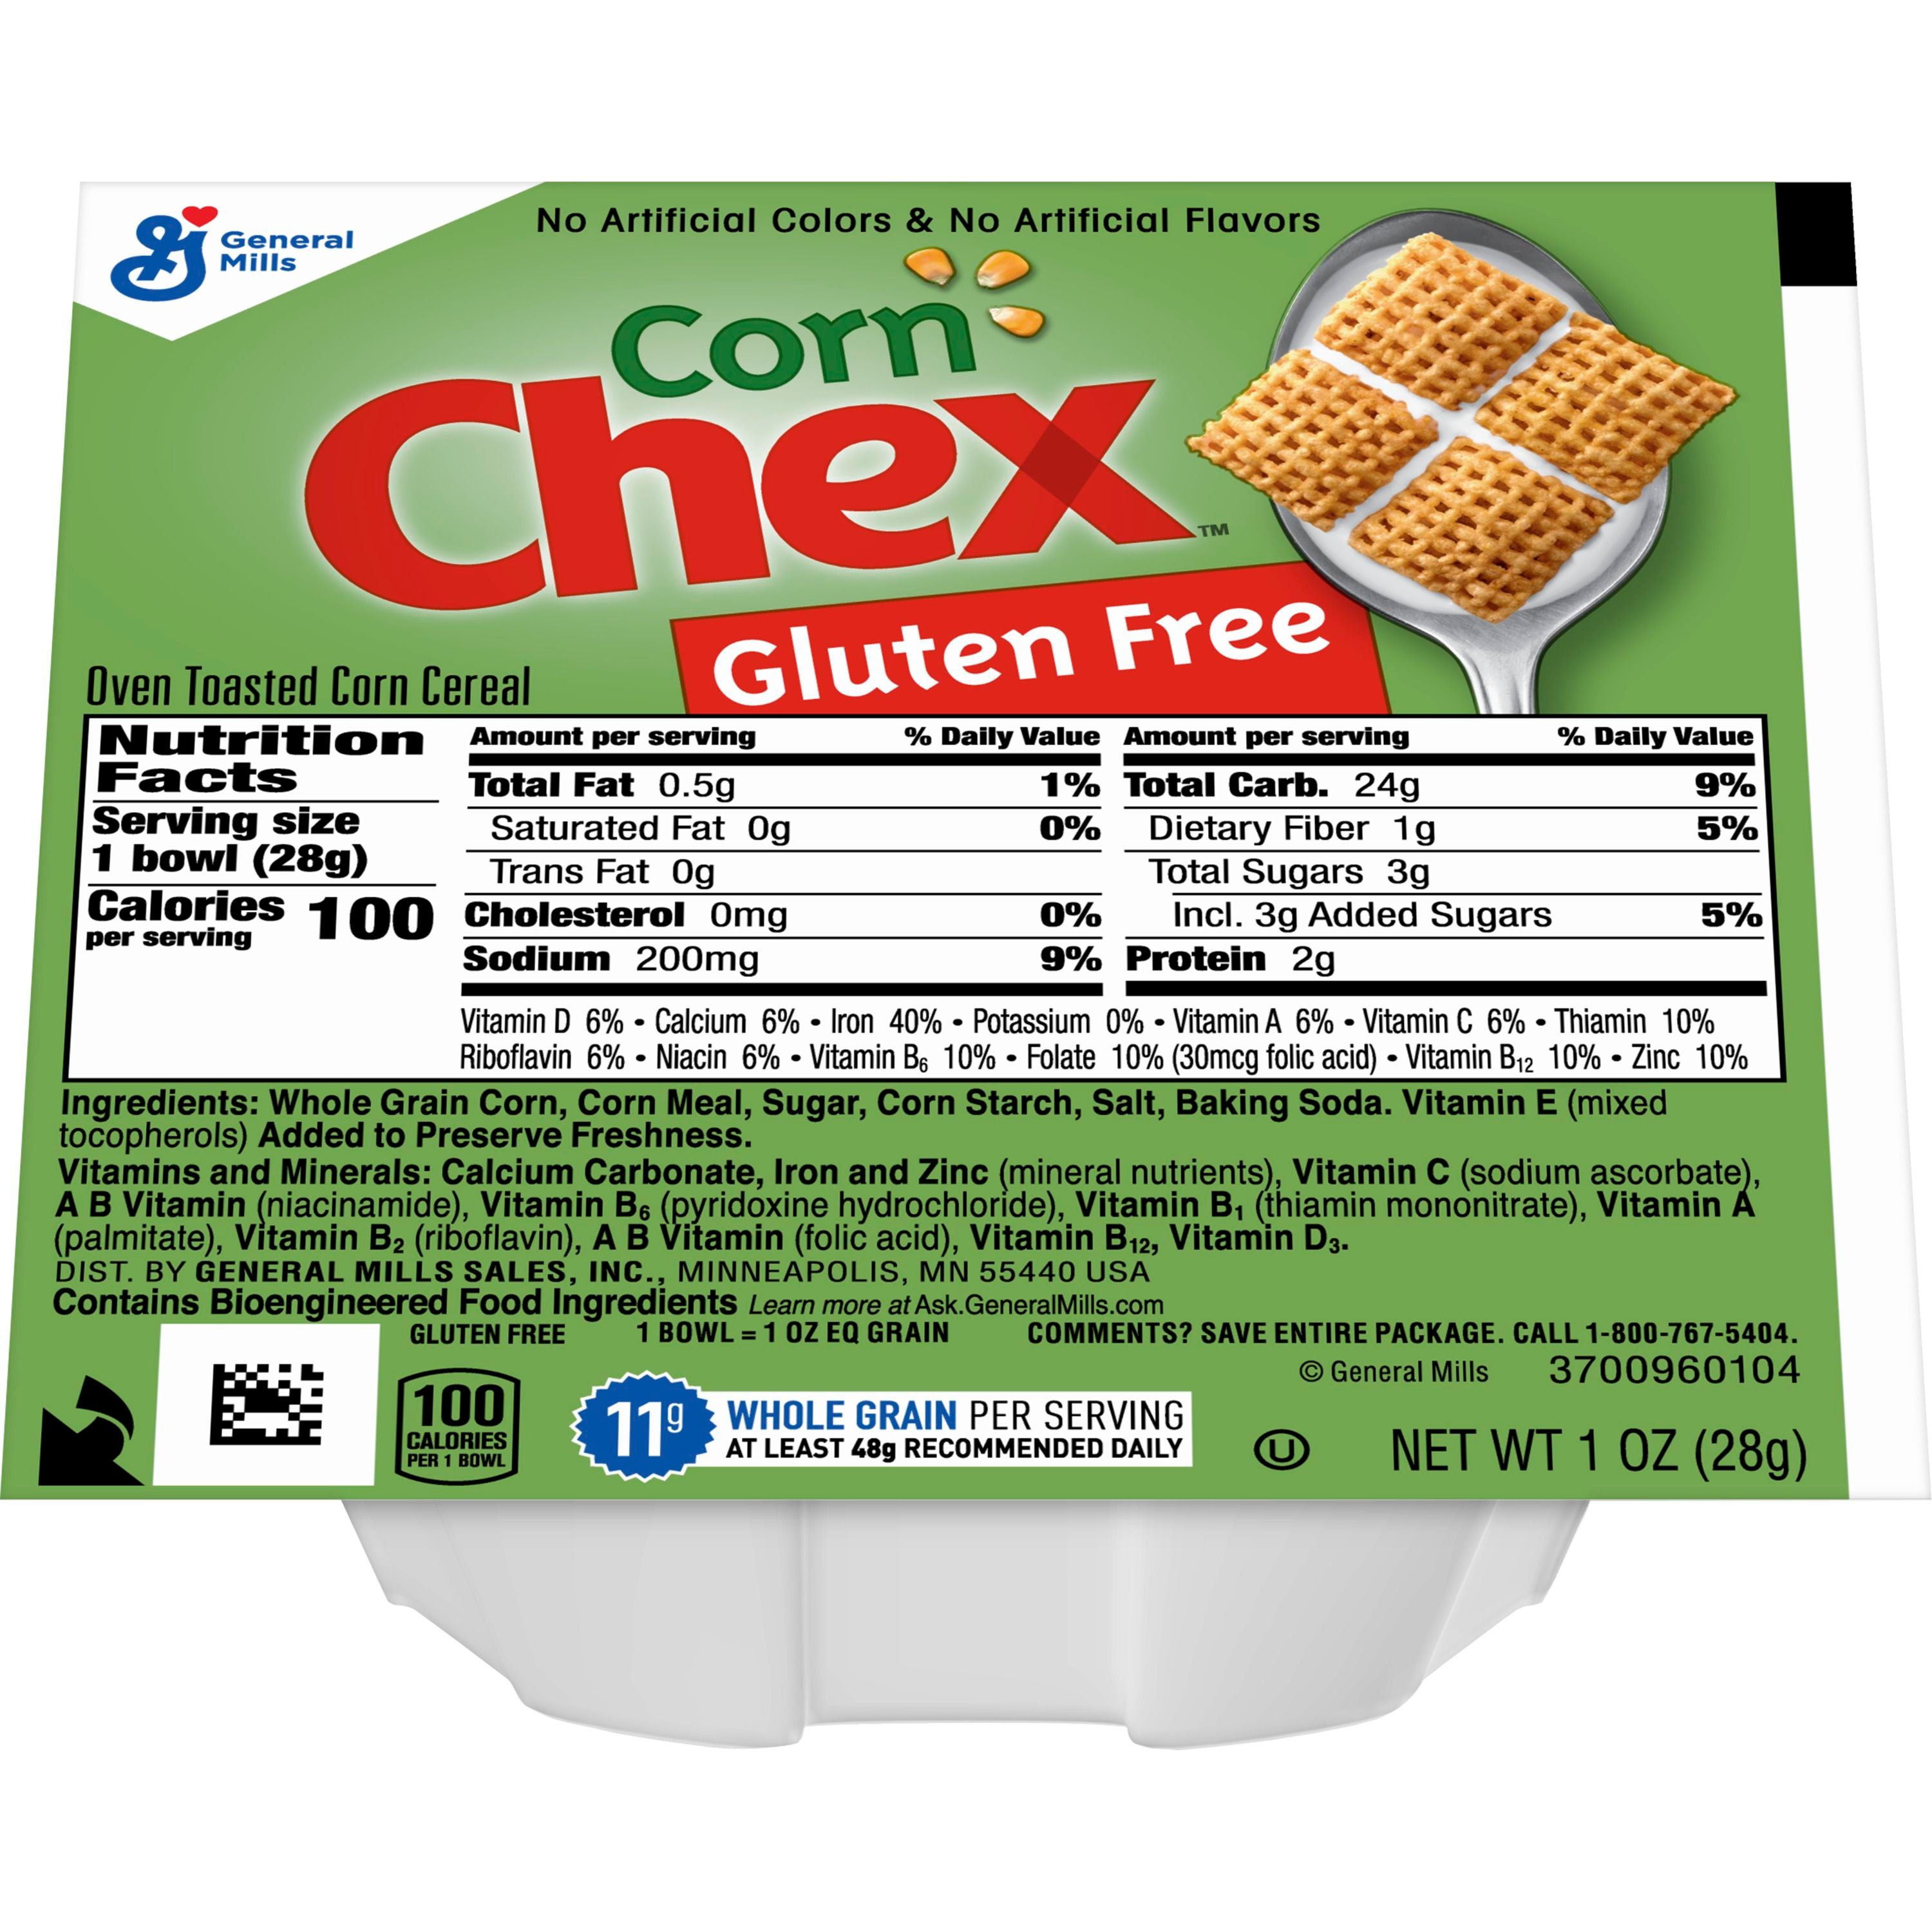 Honey Nut Cheerios™ Cereal Single Serve K12 2oz Eq Grain